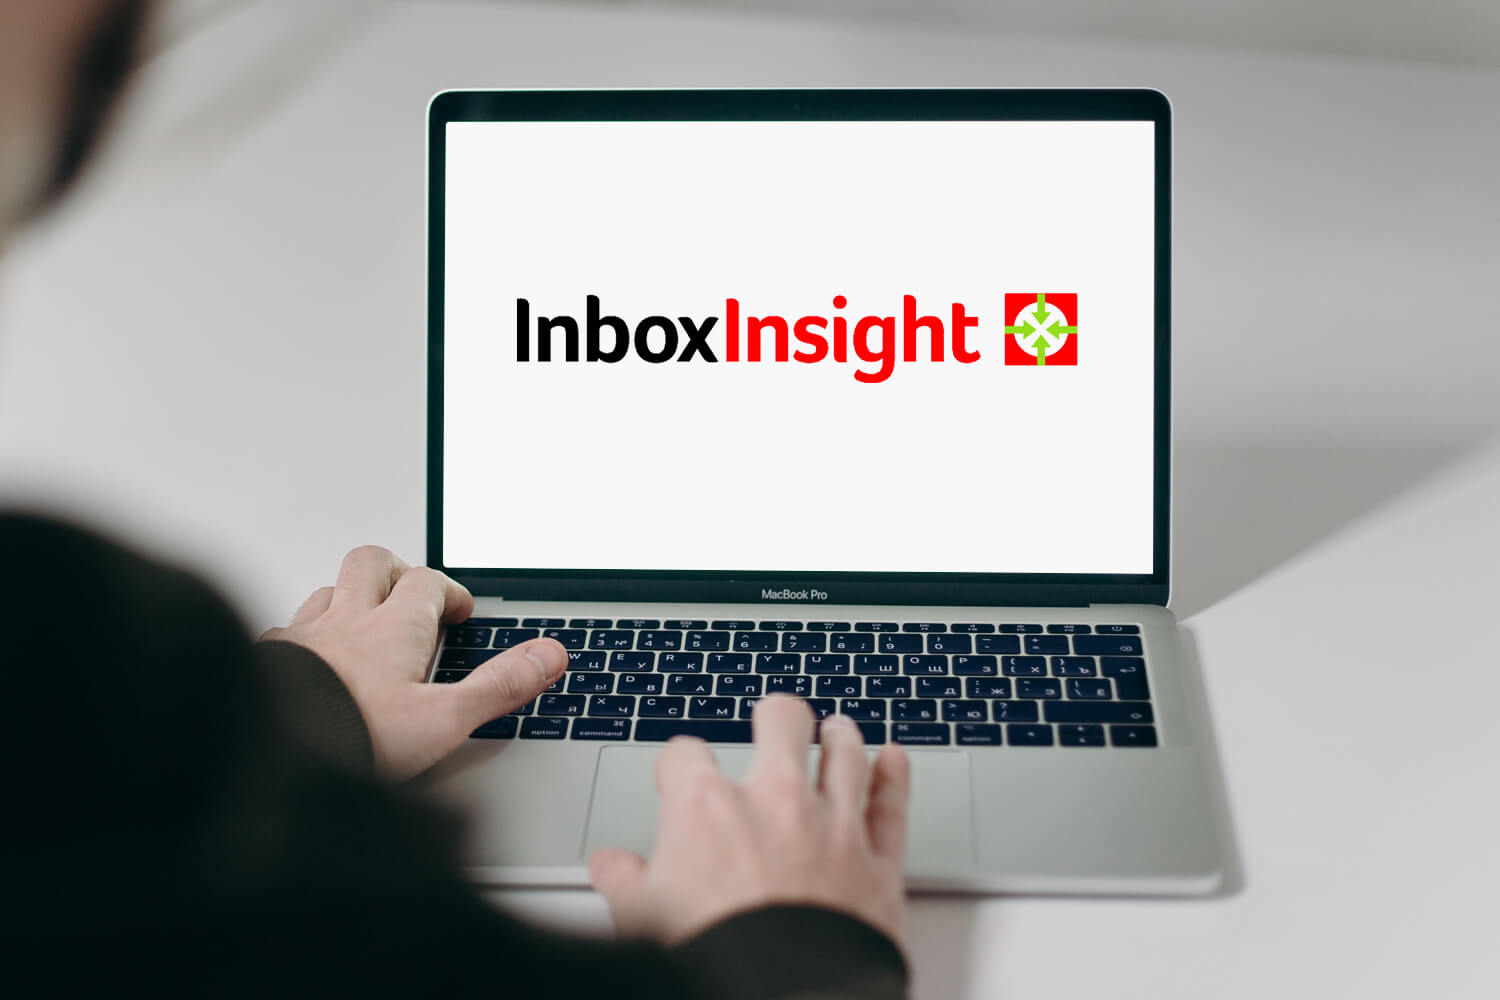 Inbox Insight logo on a laptop